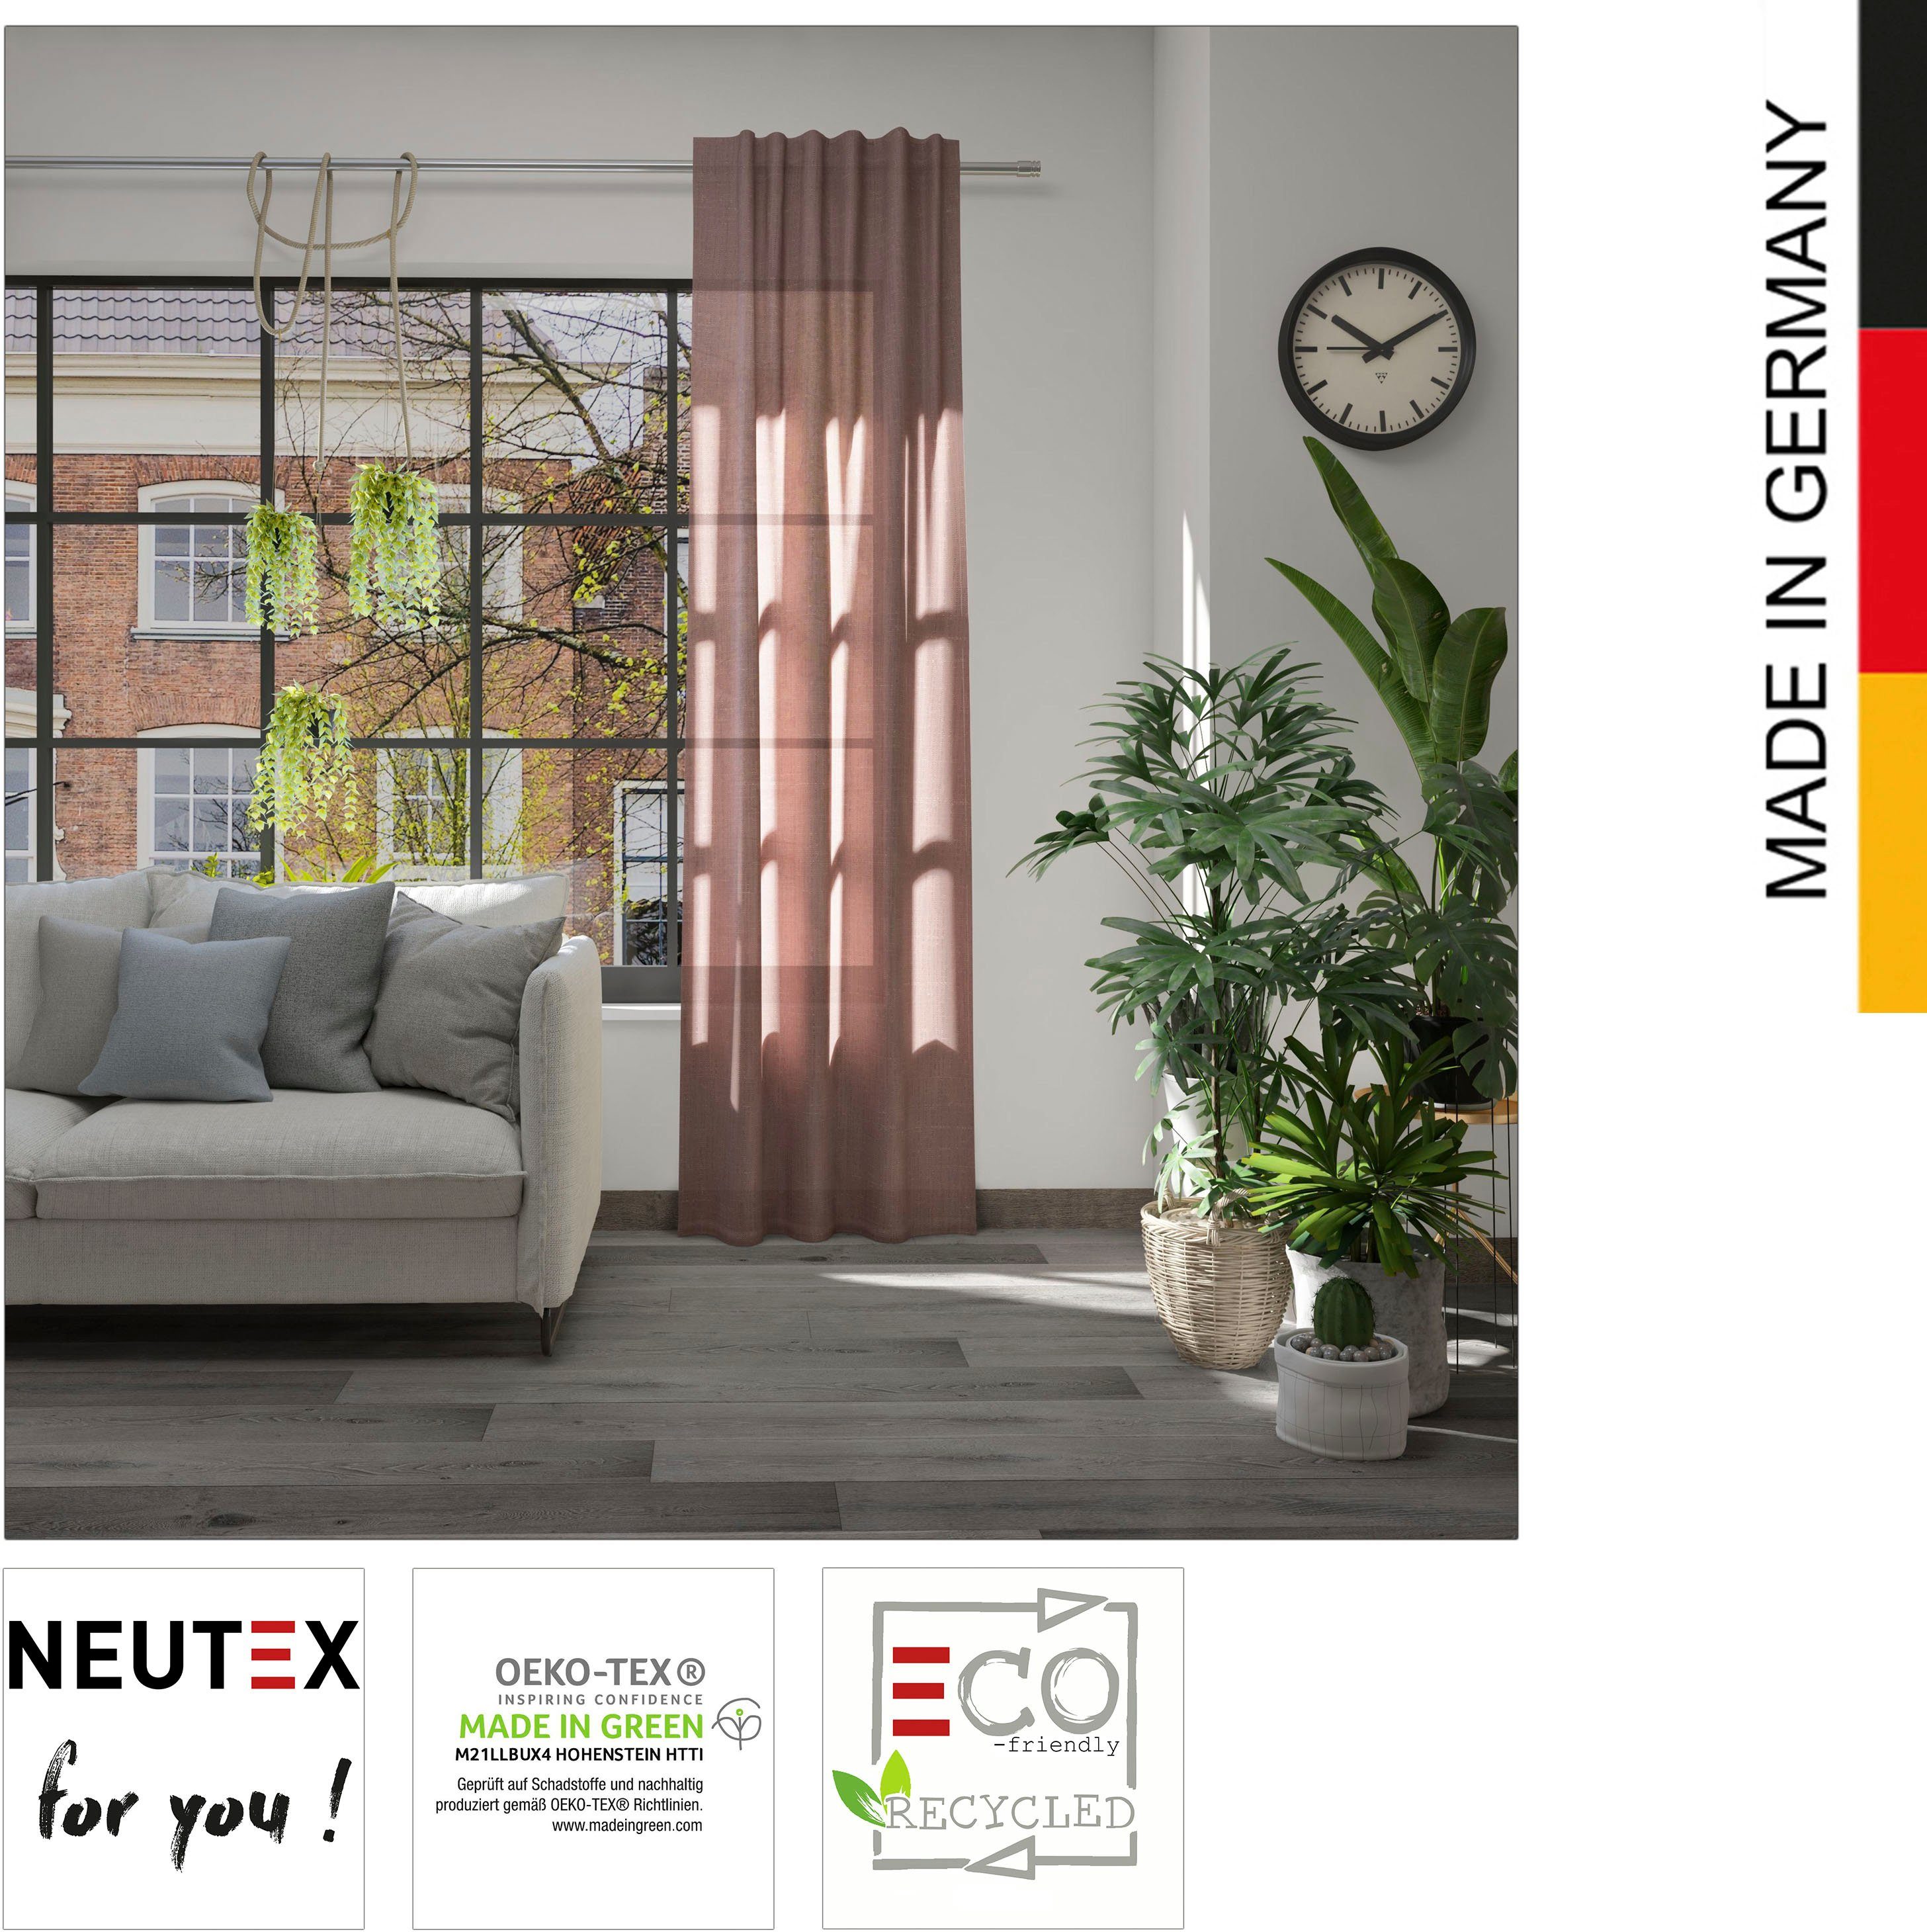 Vorhang Leon Eco, Neutex for Multifunktionsband (1 halbtransparent, St), lachs you!, nachhaltig